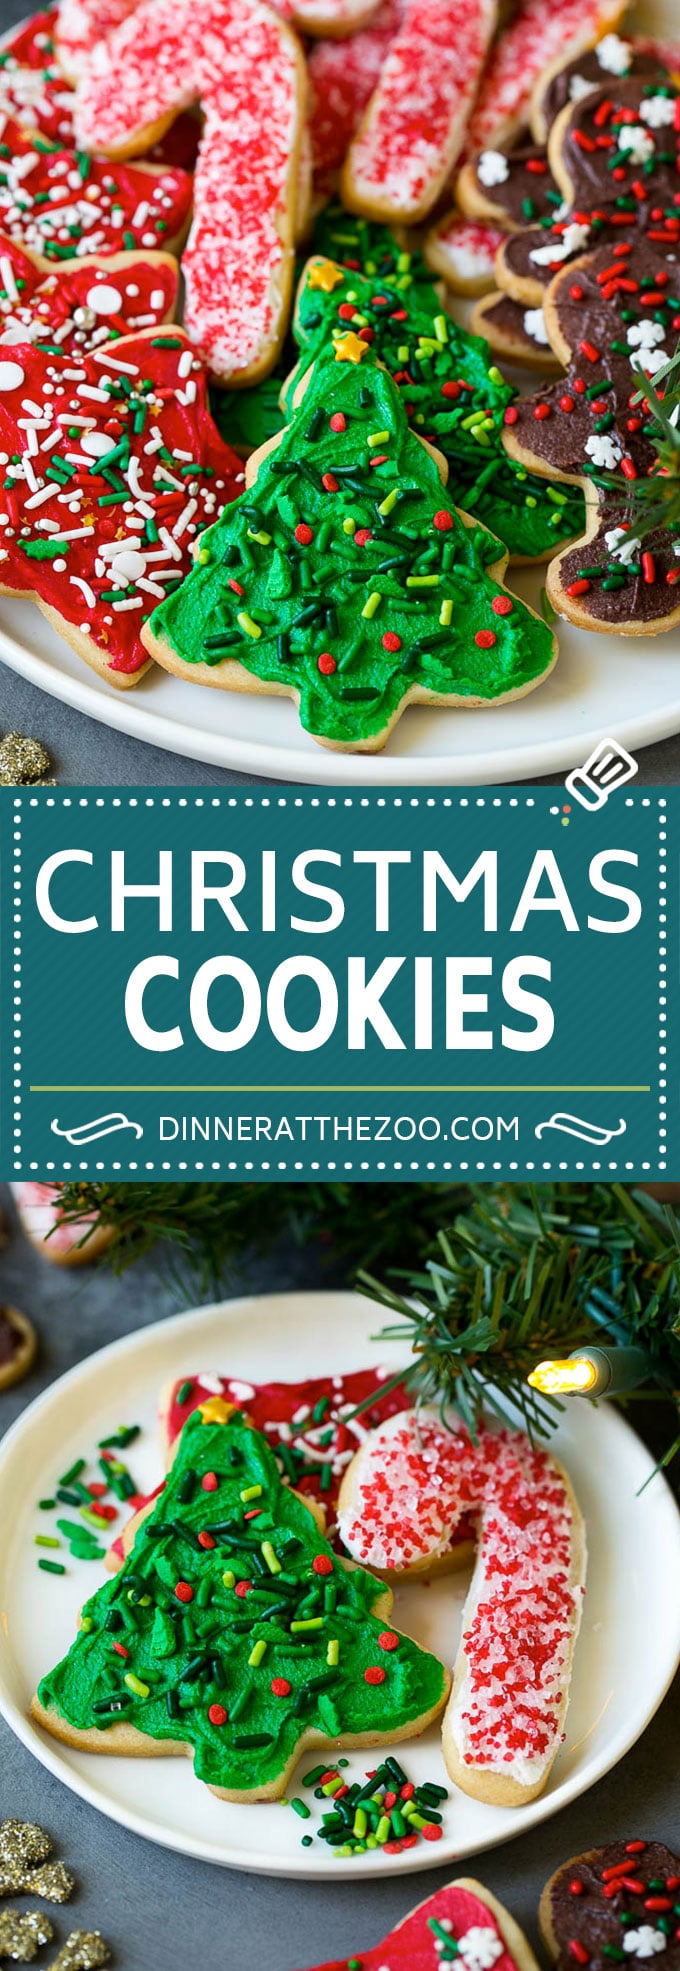 Christmas Sugar Cookies Recipe | Christmas Cookies #cookies #frosting #sprinkles #sugarcookies #christmas #dessert #dinneratthezoo